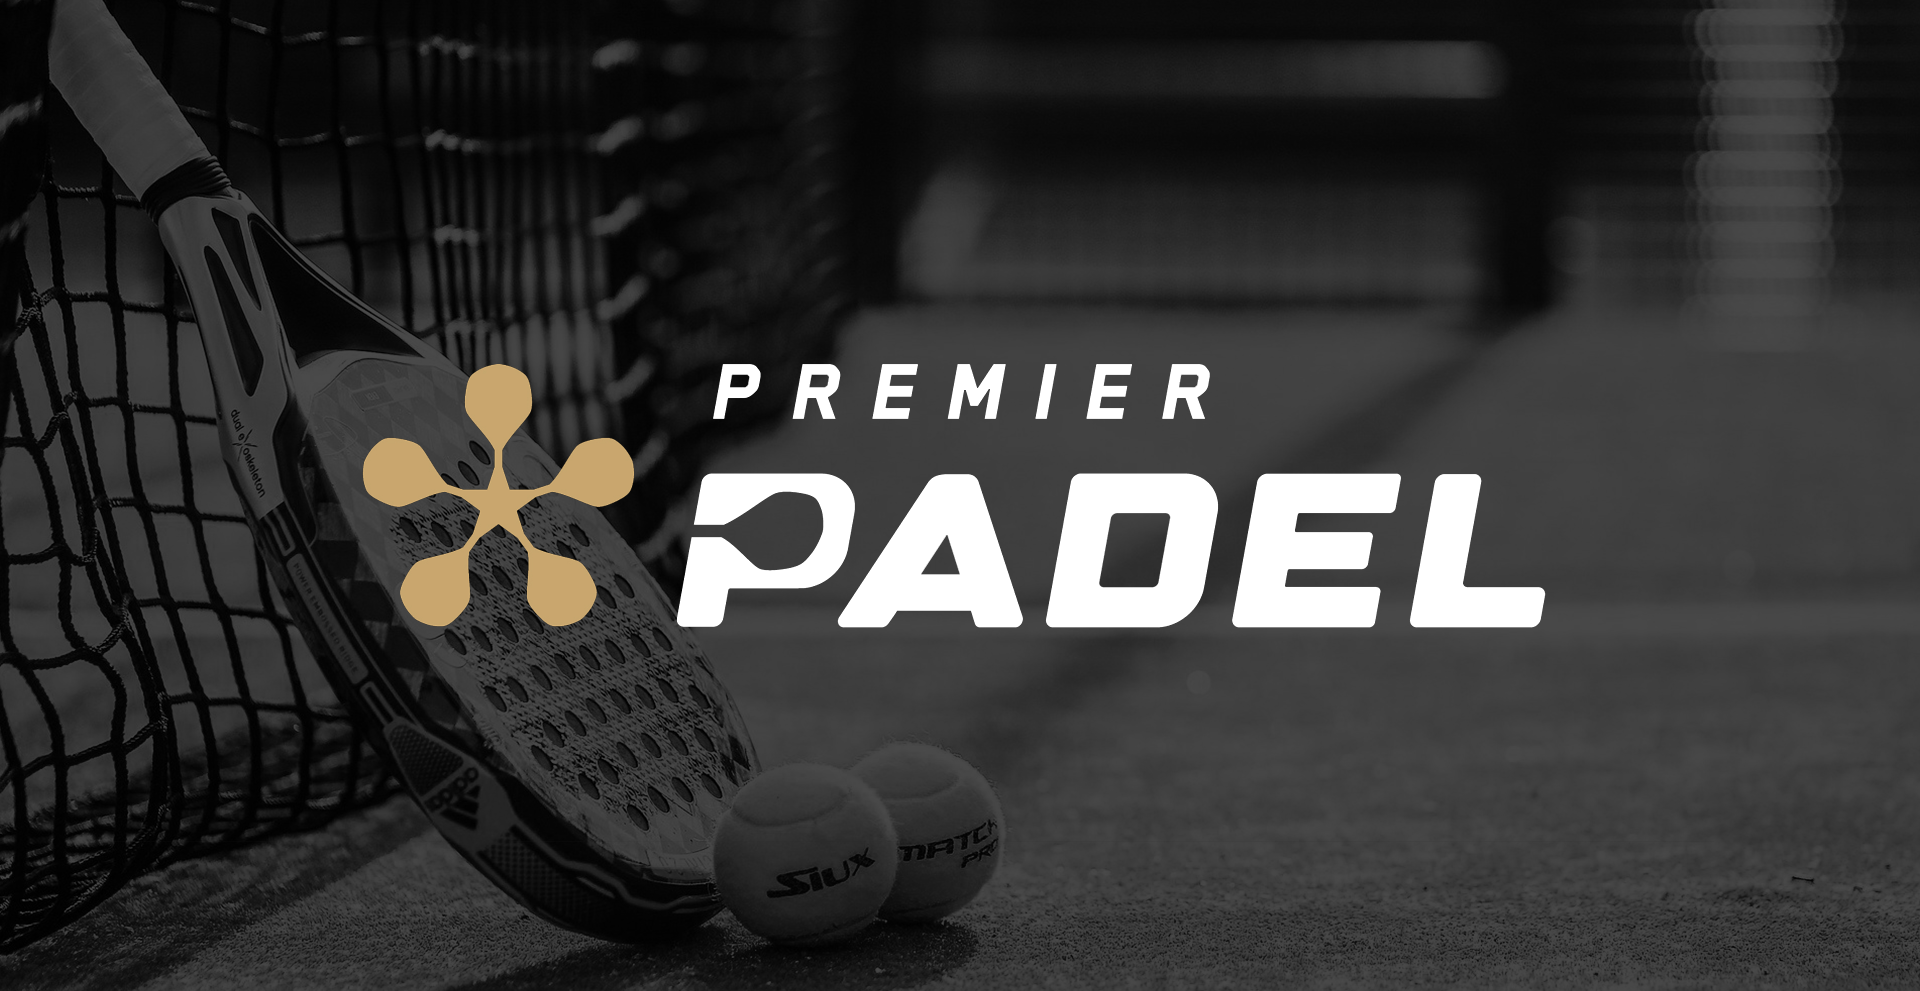 Premier Padel Tour 2022